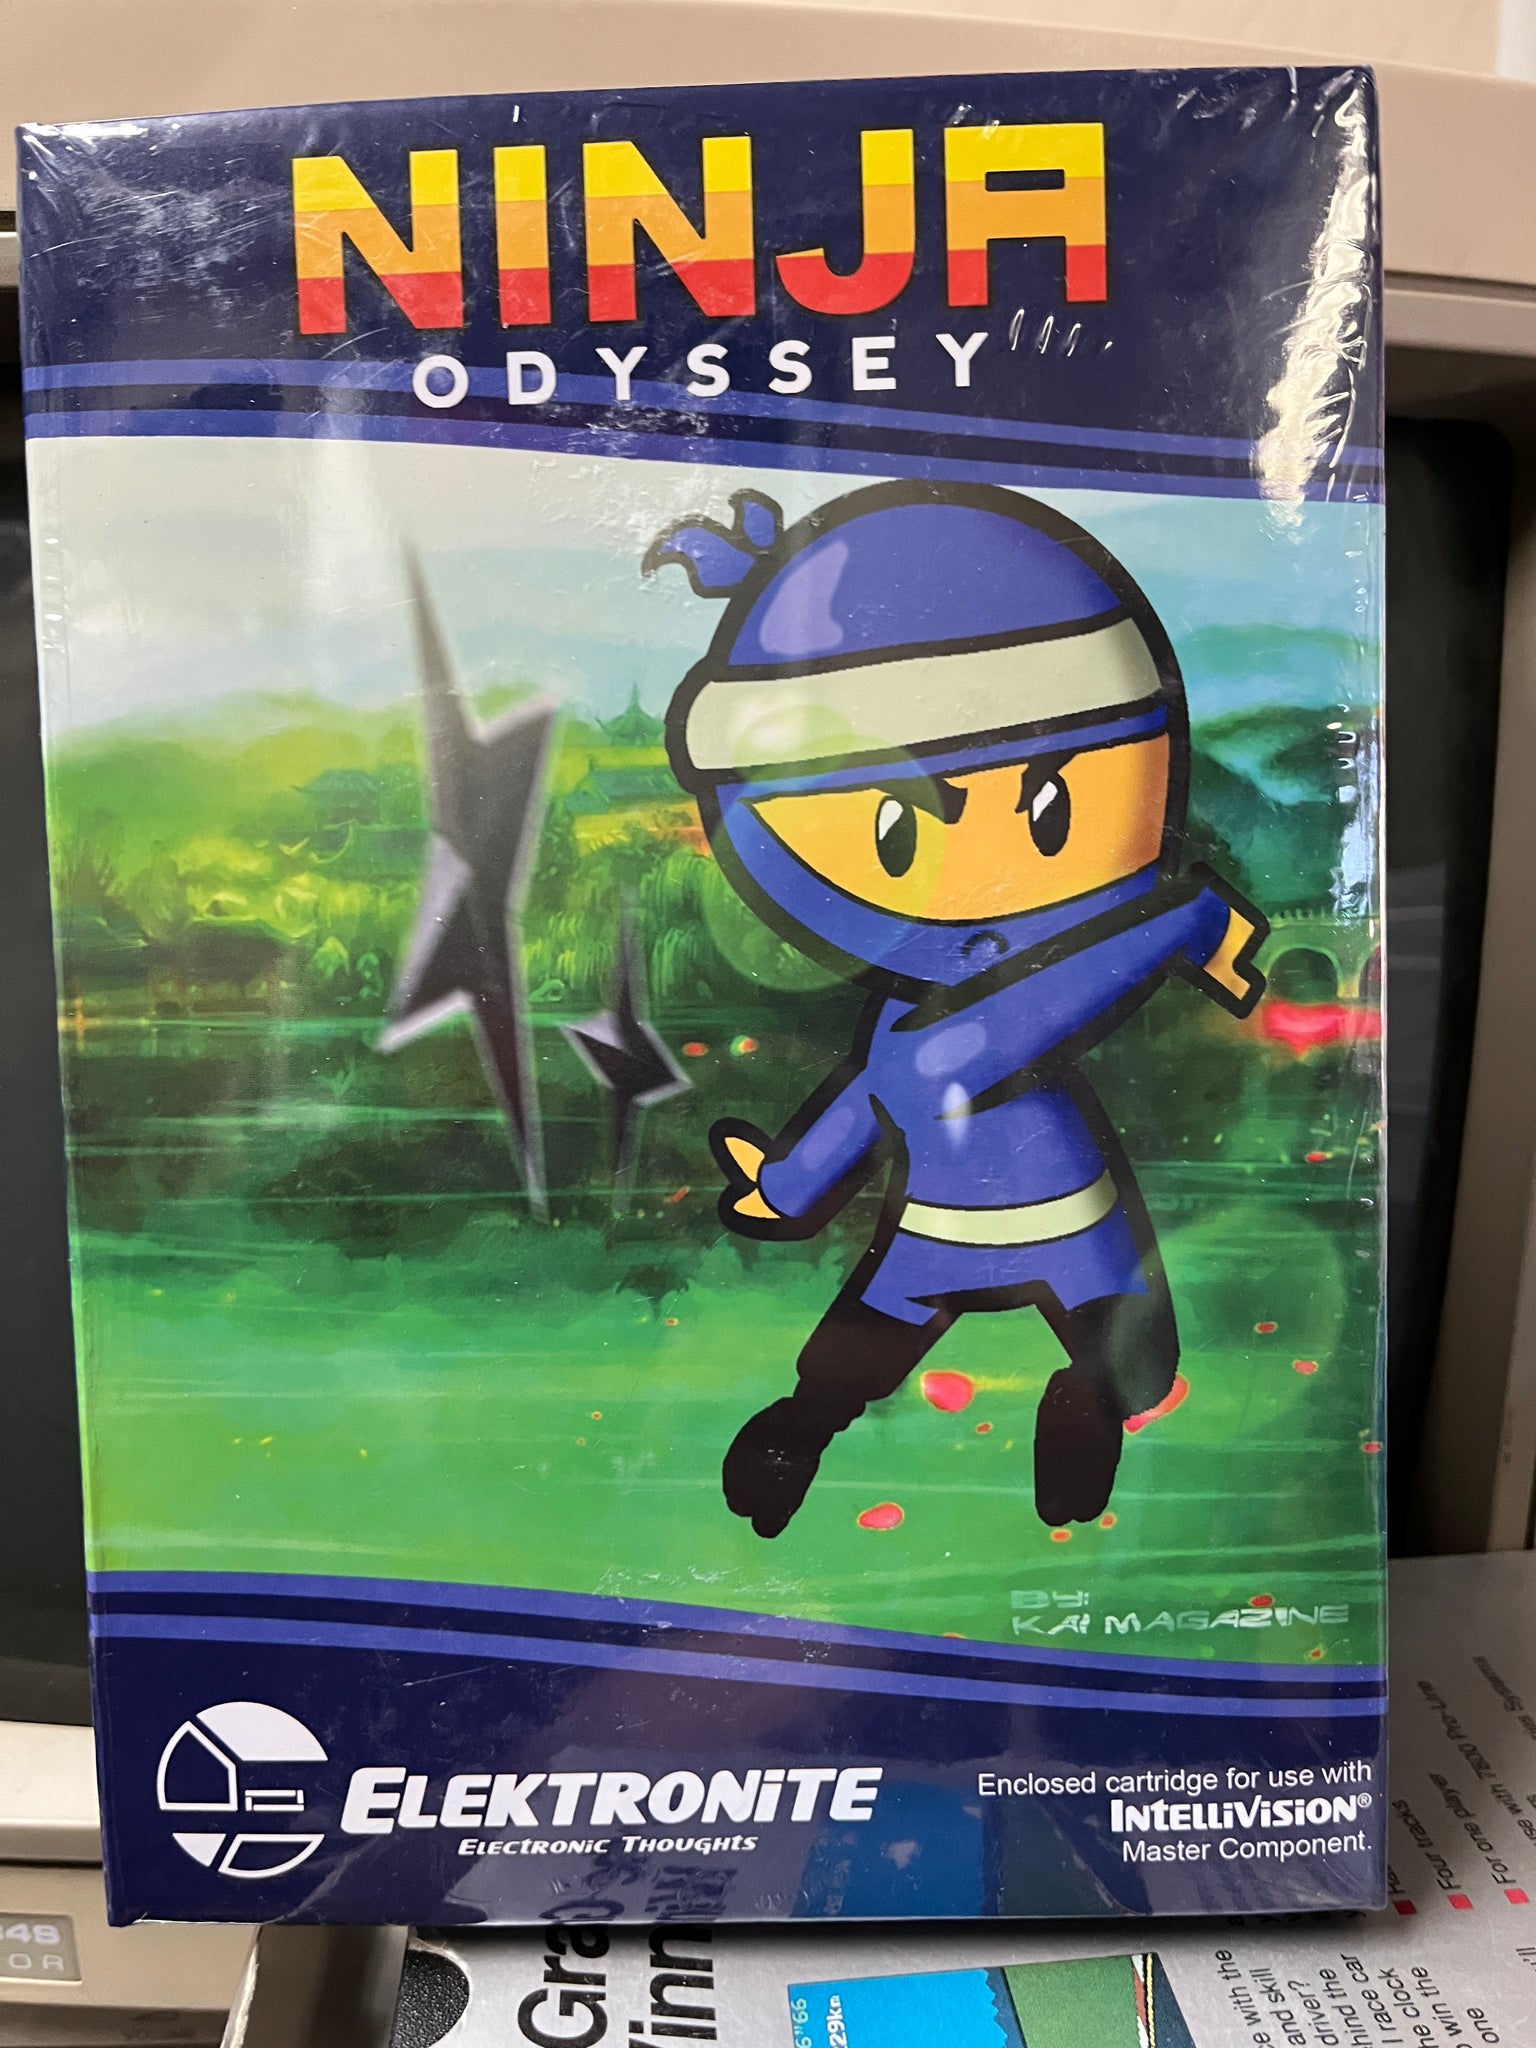 Ninja Odyssey for Intellvision by Elektronite